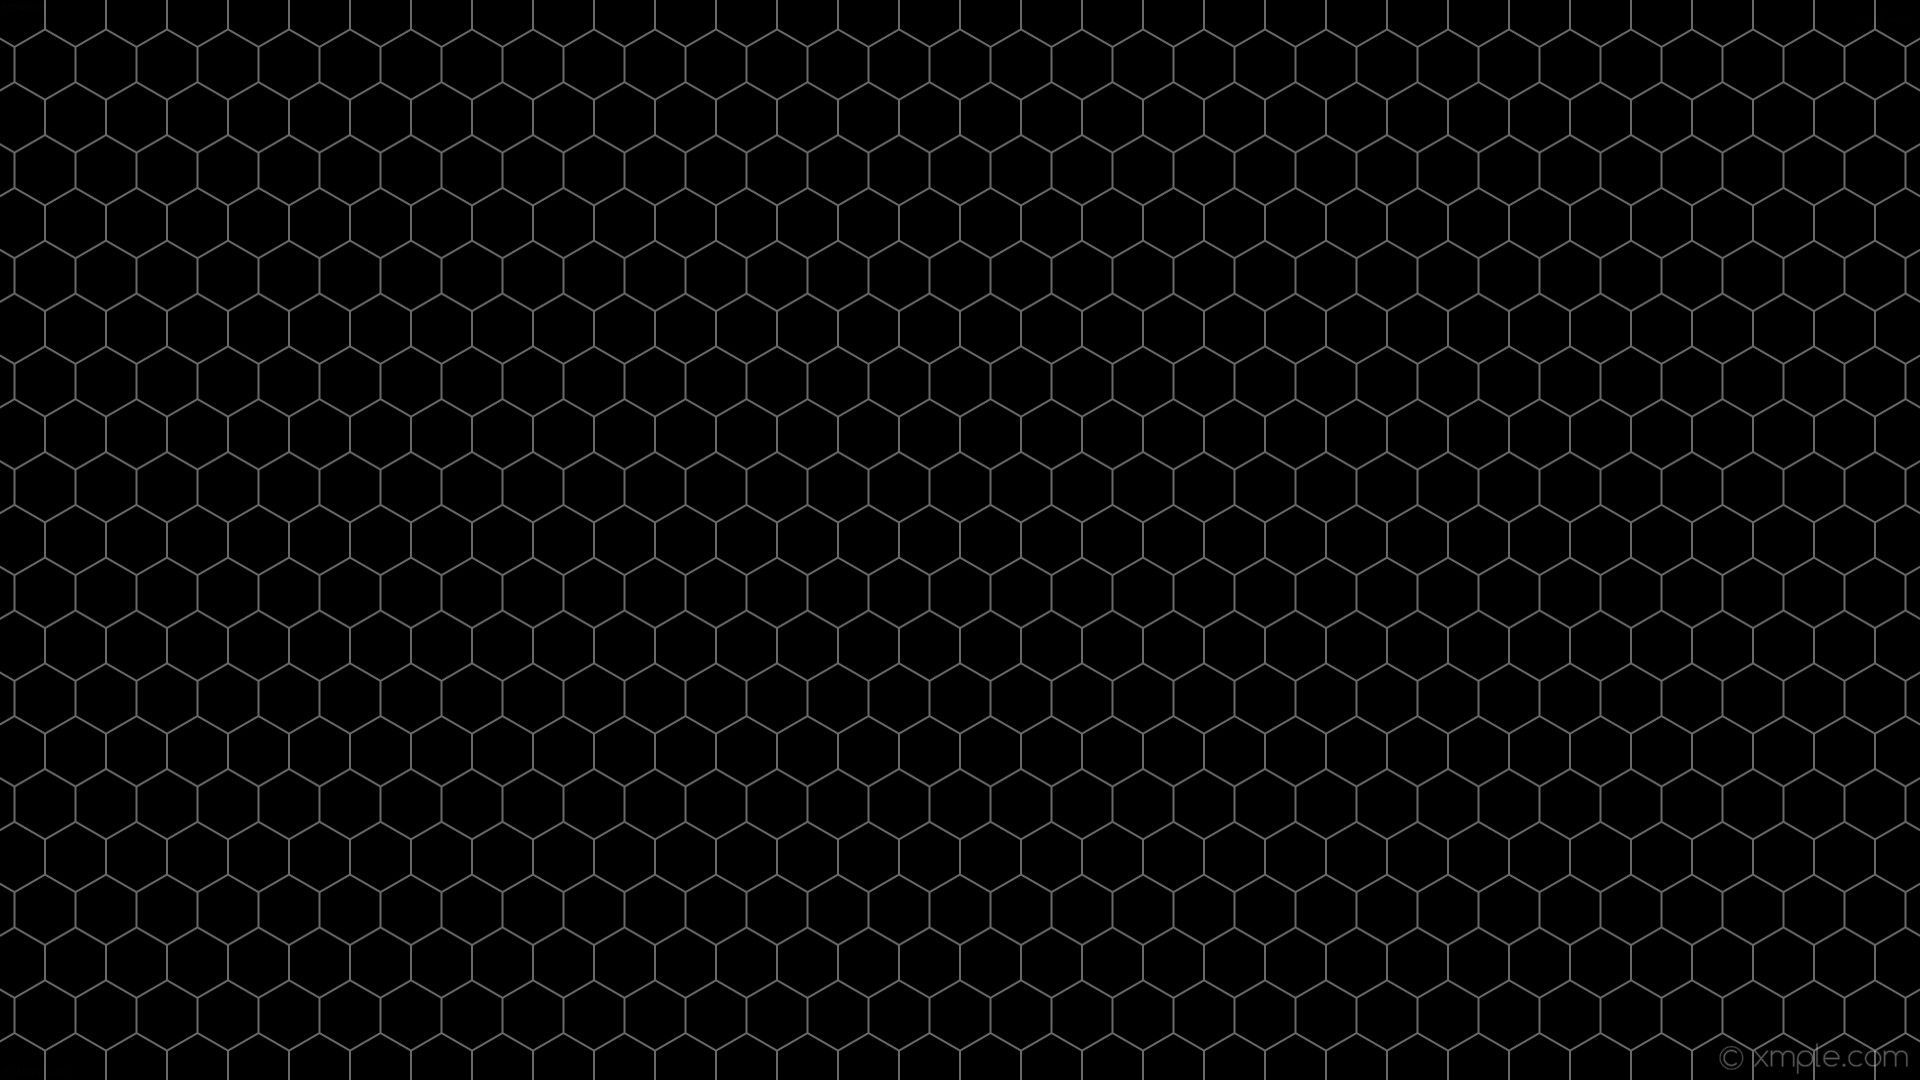 Black Hexagon Wallpaper Free .wallpaperaccess.com